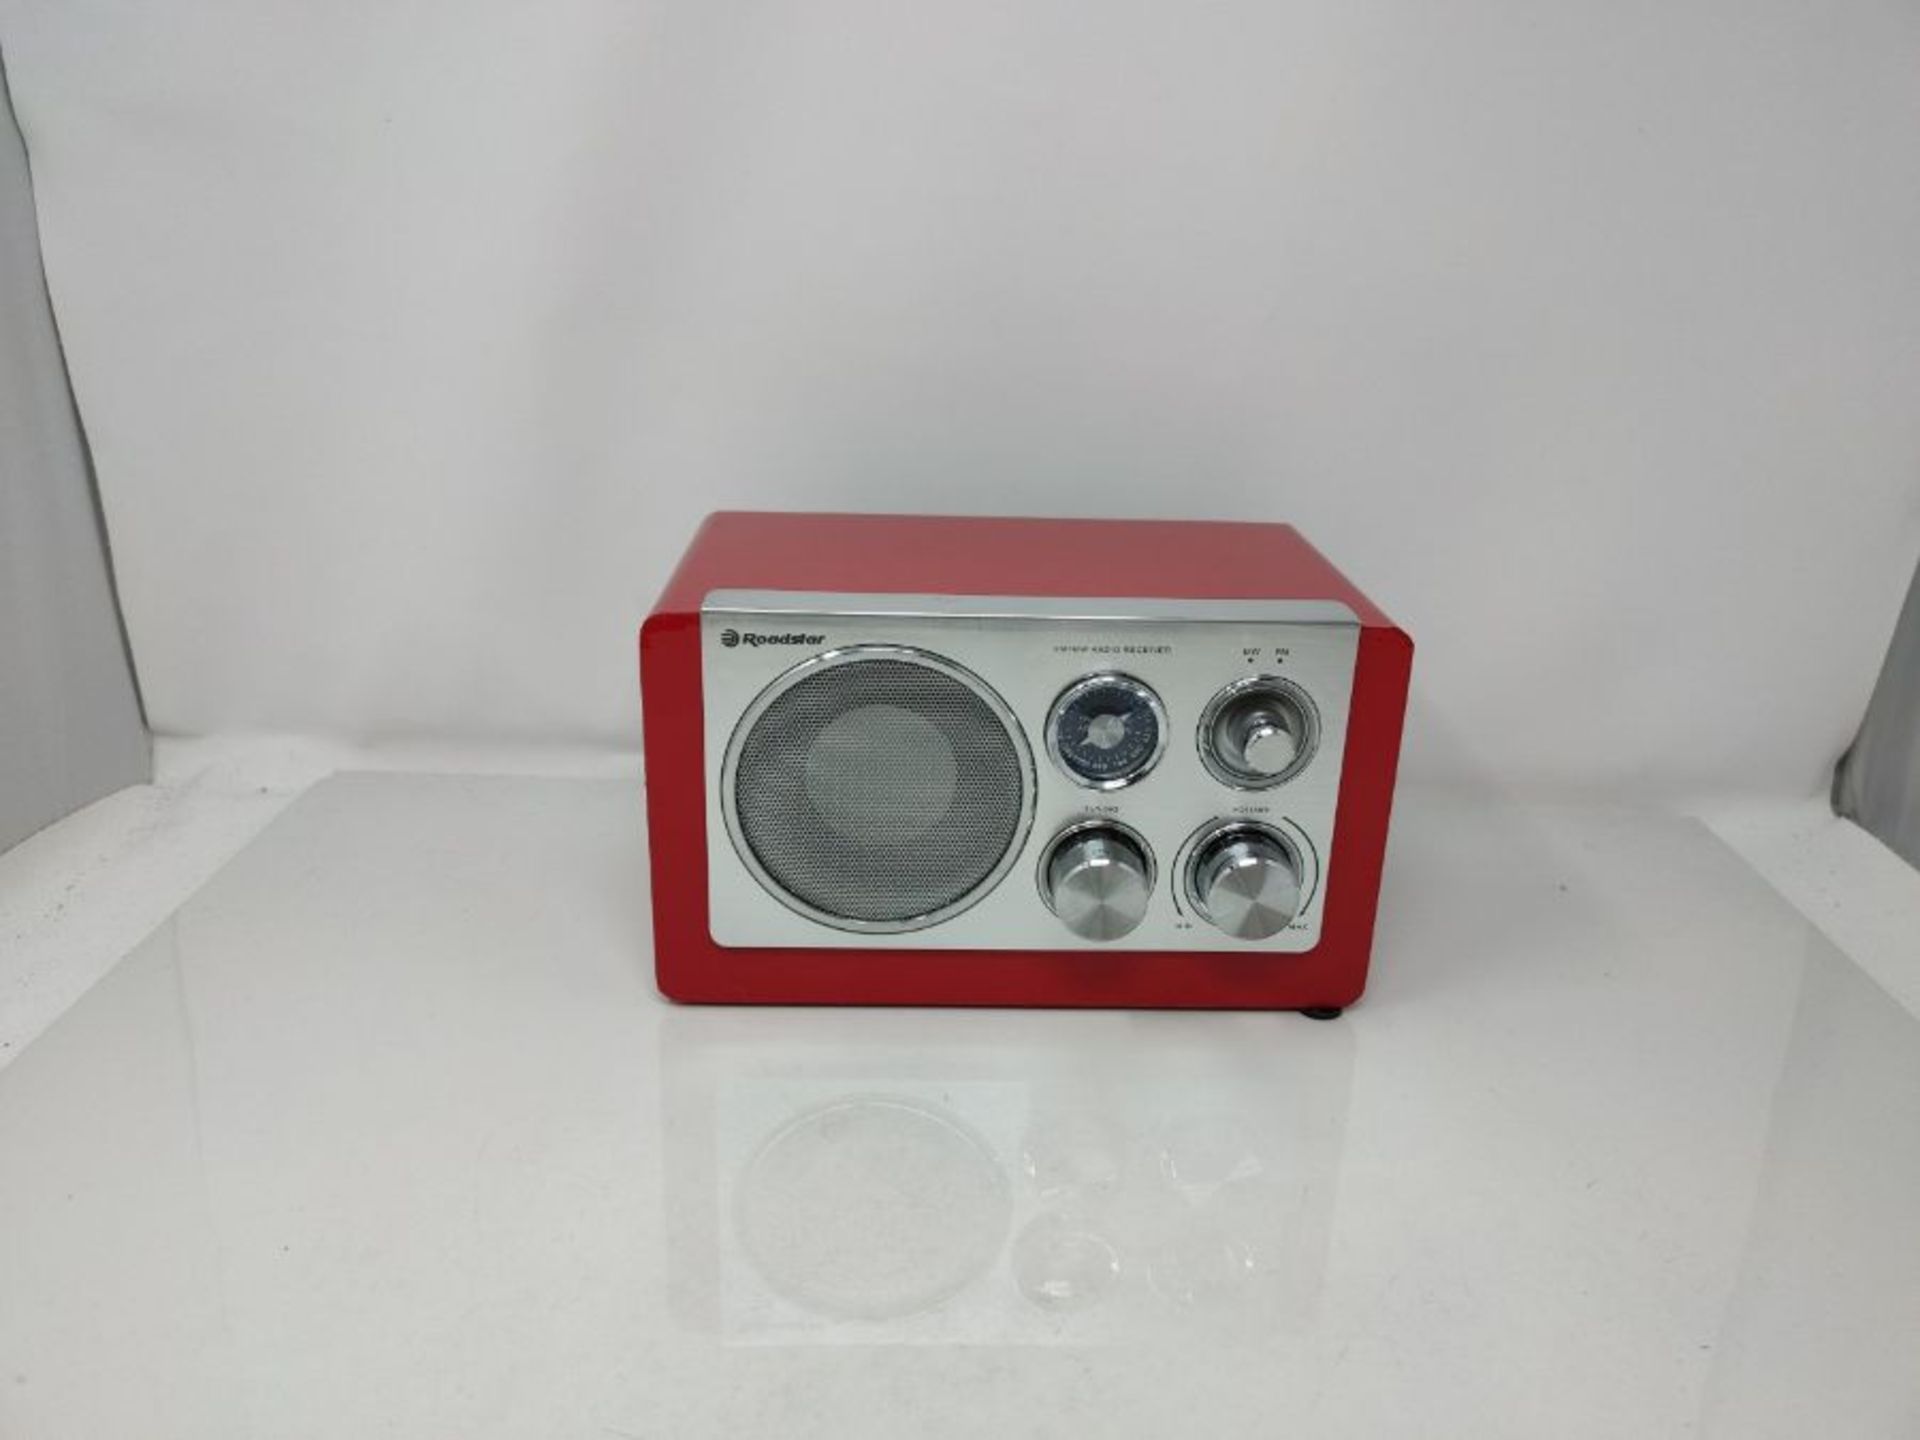 RED Roadstar HRA 1325US Retro Design Radio with USB/SD Slot/MP3) - Image 2 of 2